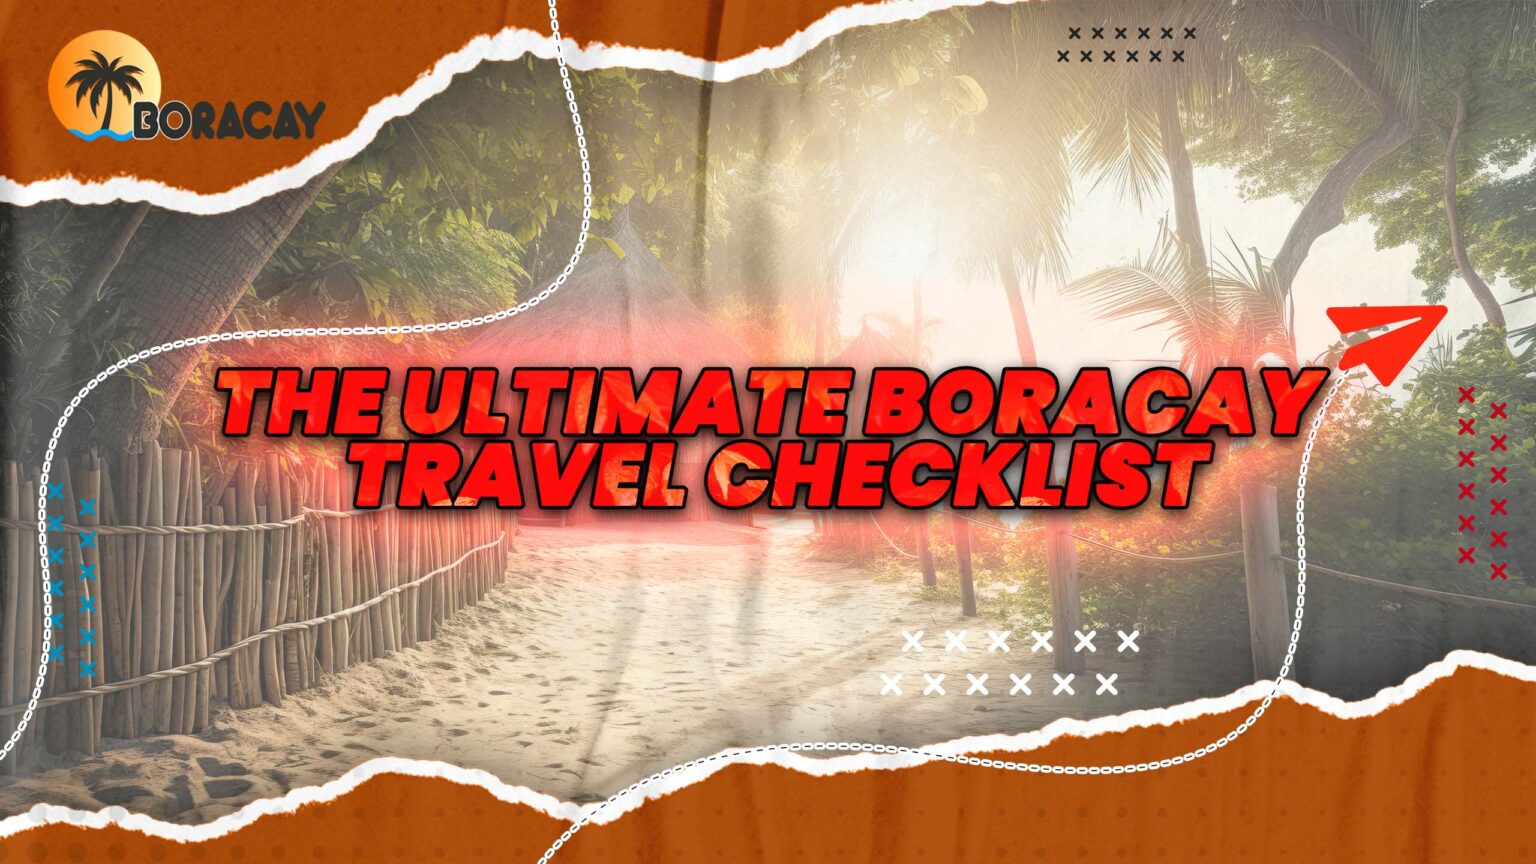 The Ultimate Boracay Travel Checklist